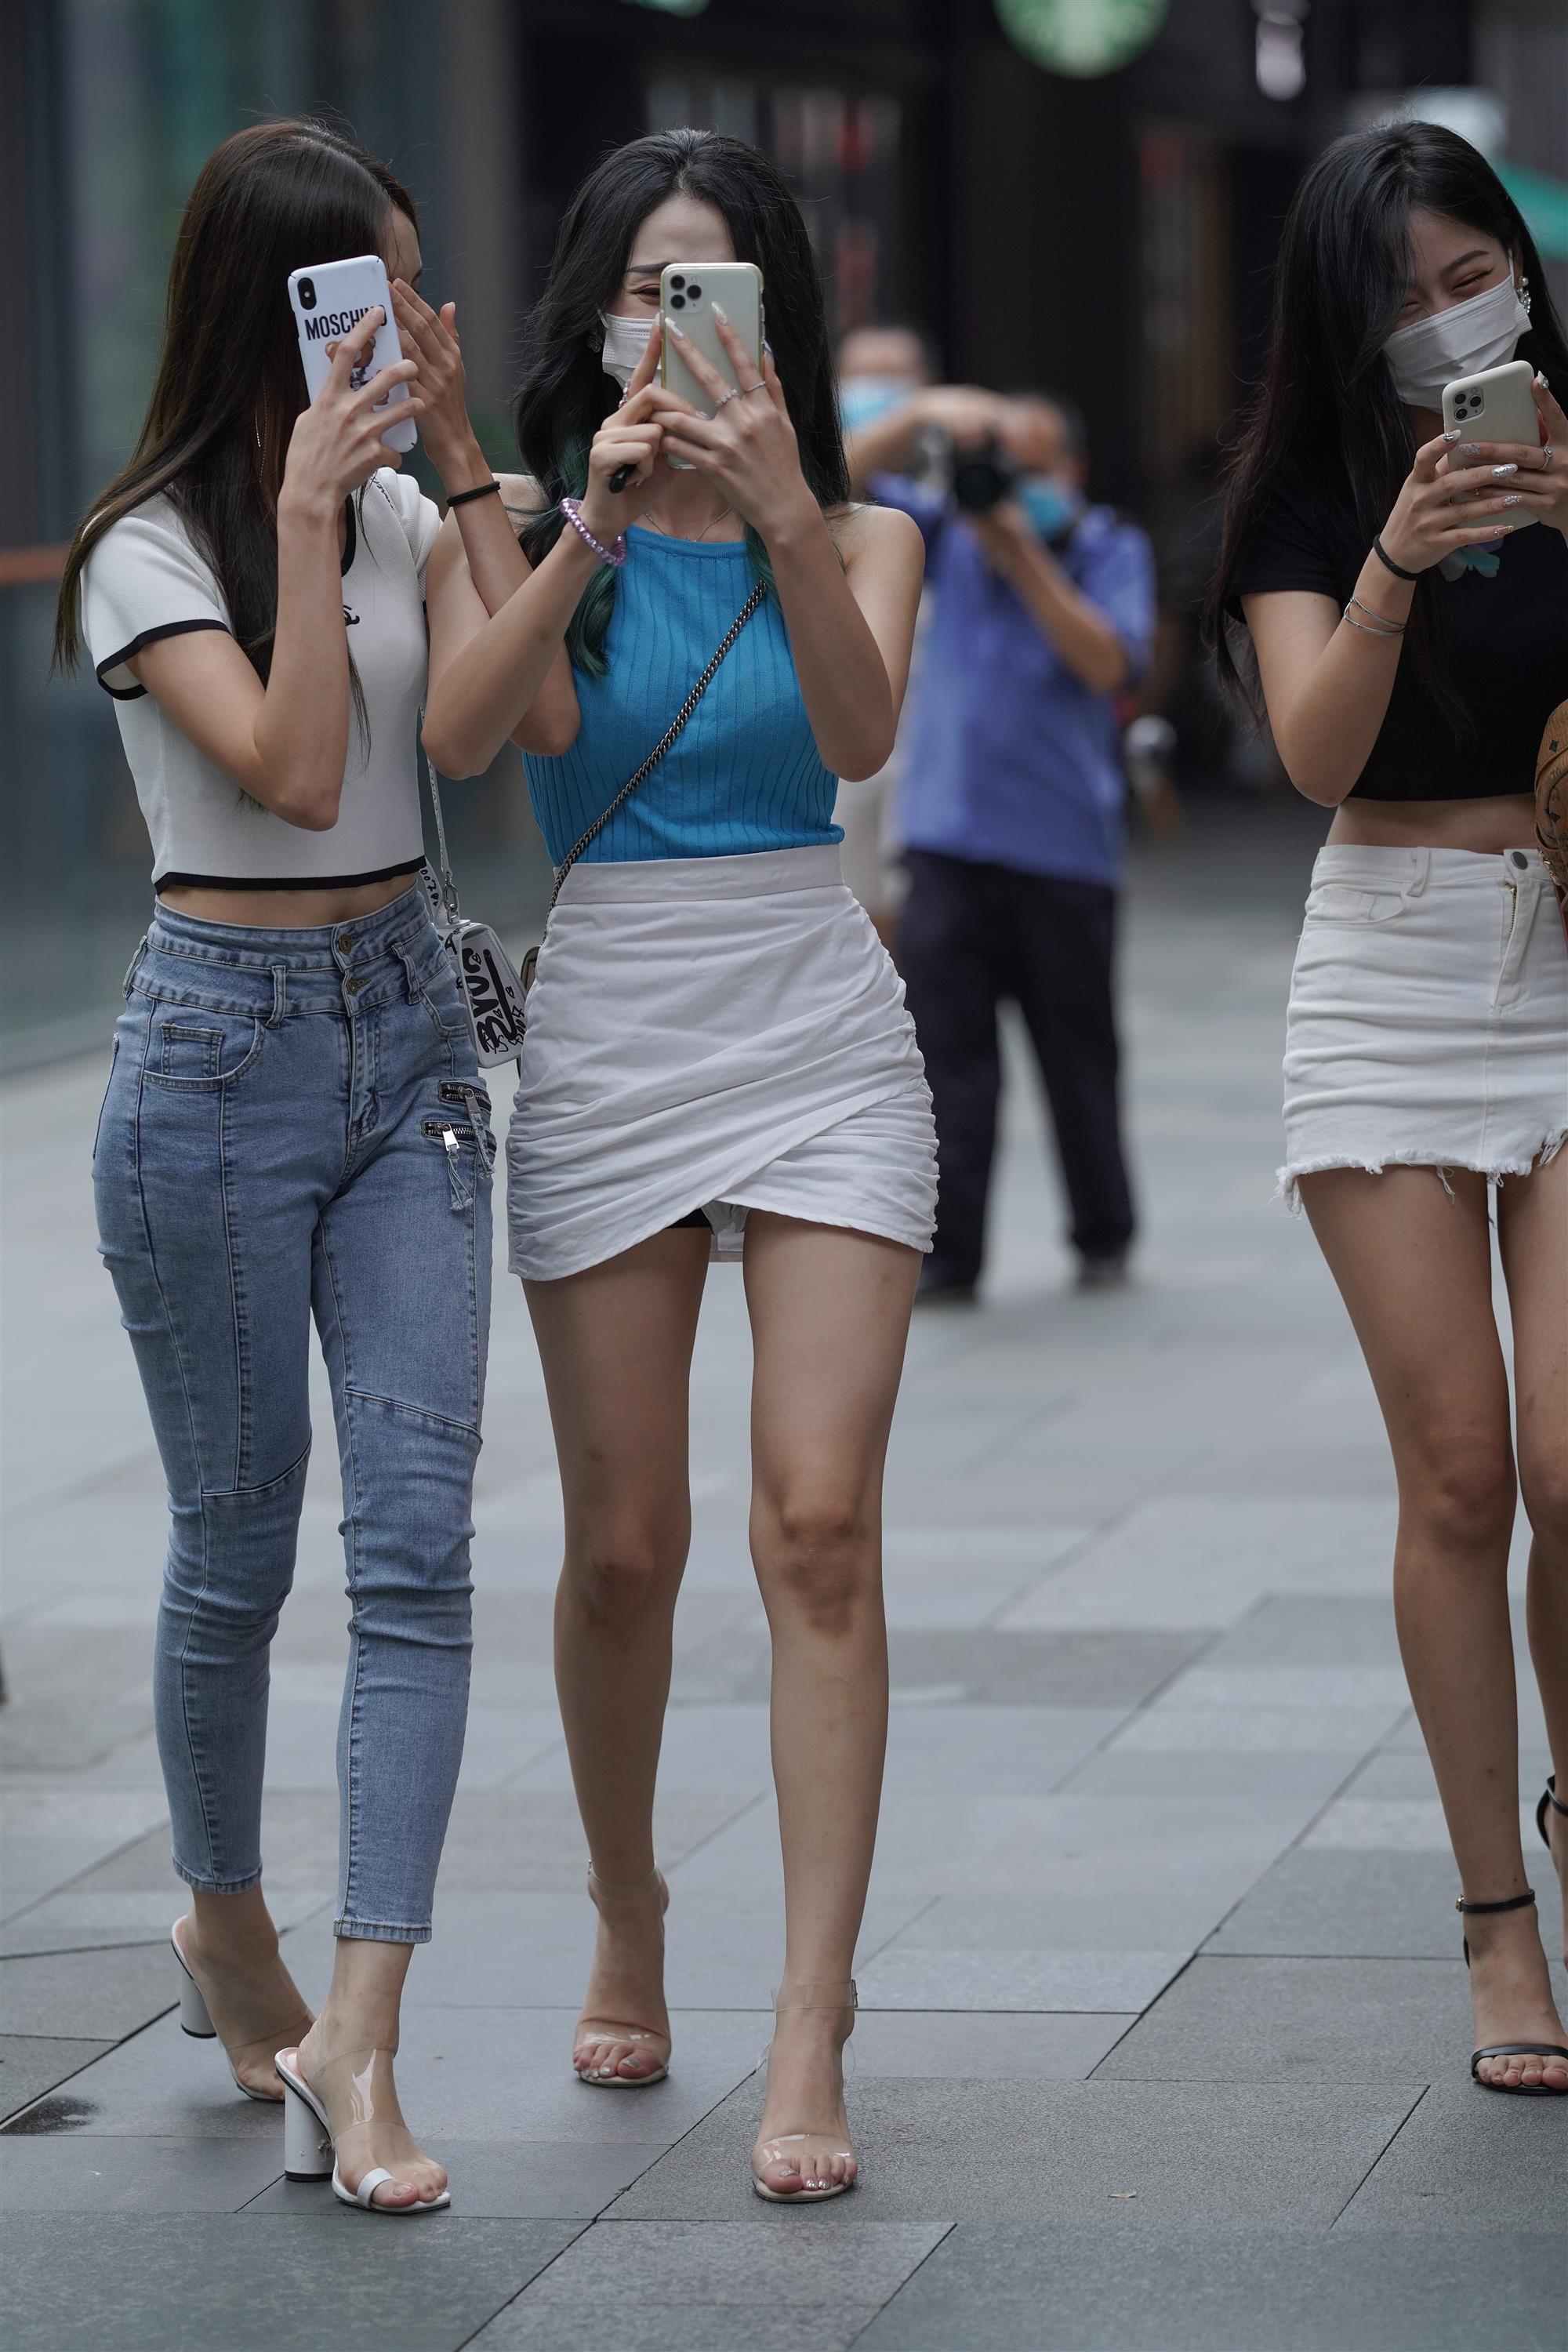 Street Three girls in short skirts - 131.jpg